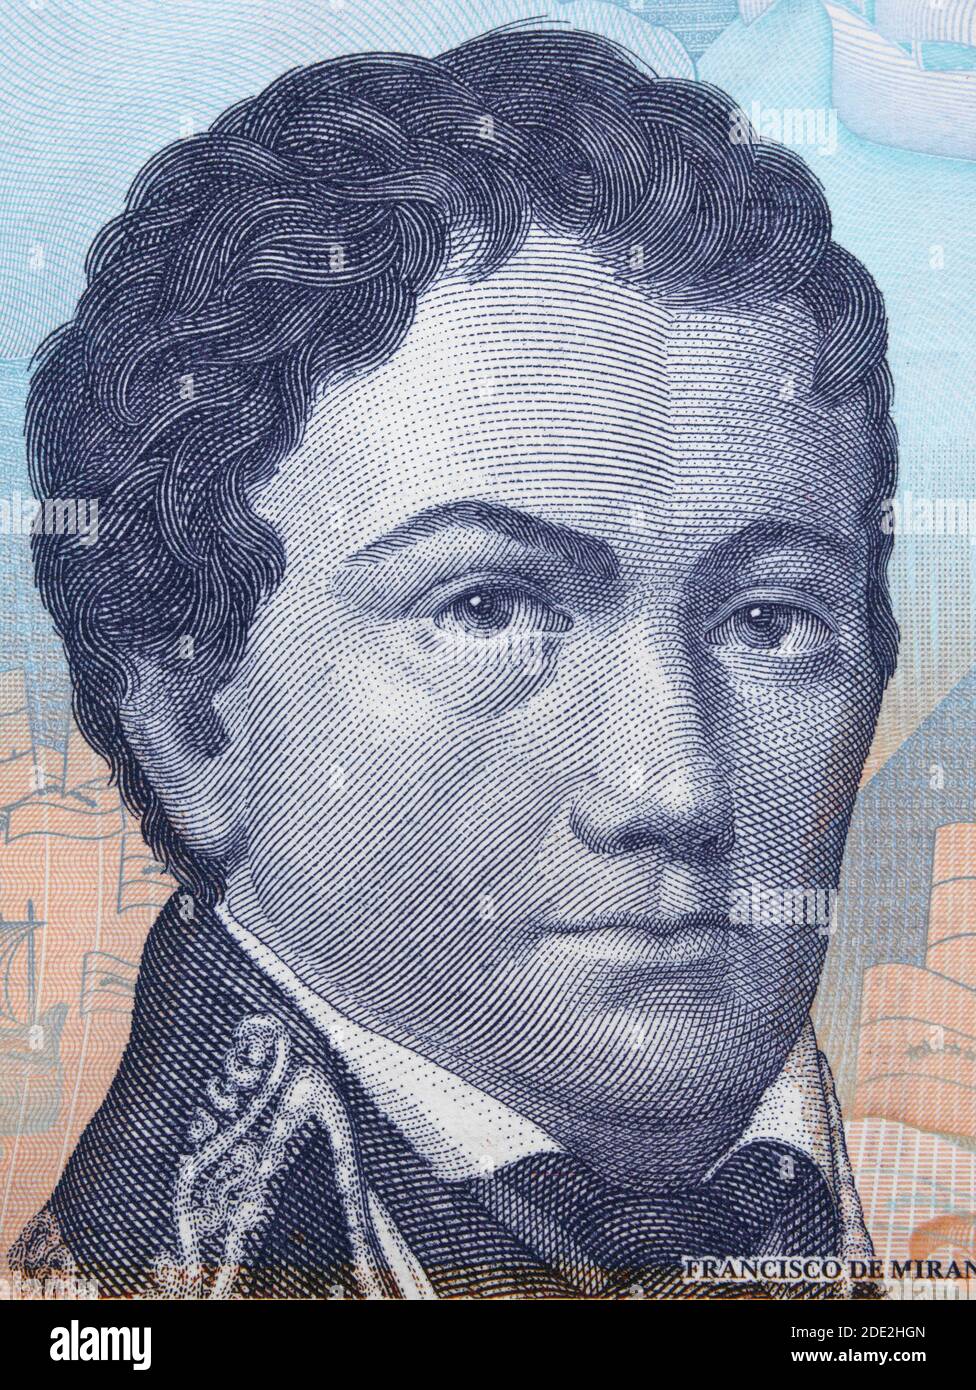 Francisco de Miranda (1750-1816) portrait on Venezuela 2 bolivares (2012) banknote, Venezuelan money closeup. Stock Photo